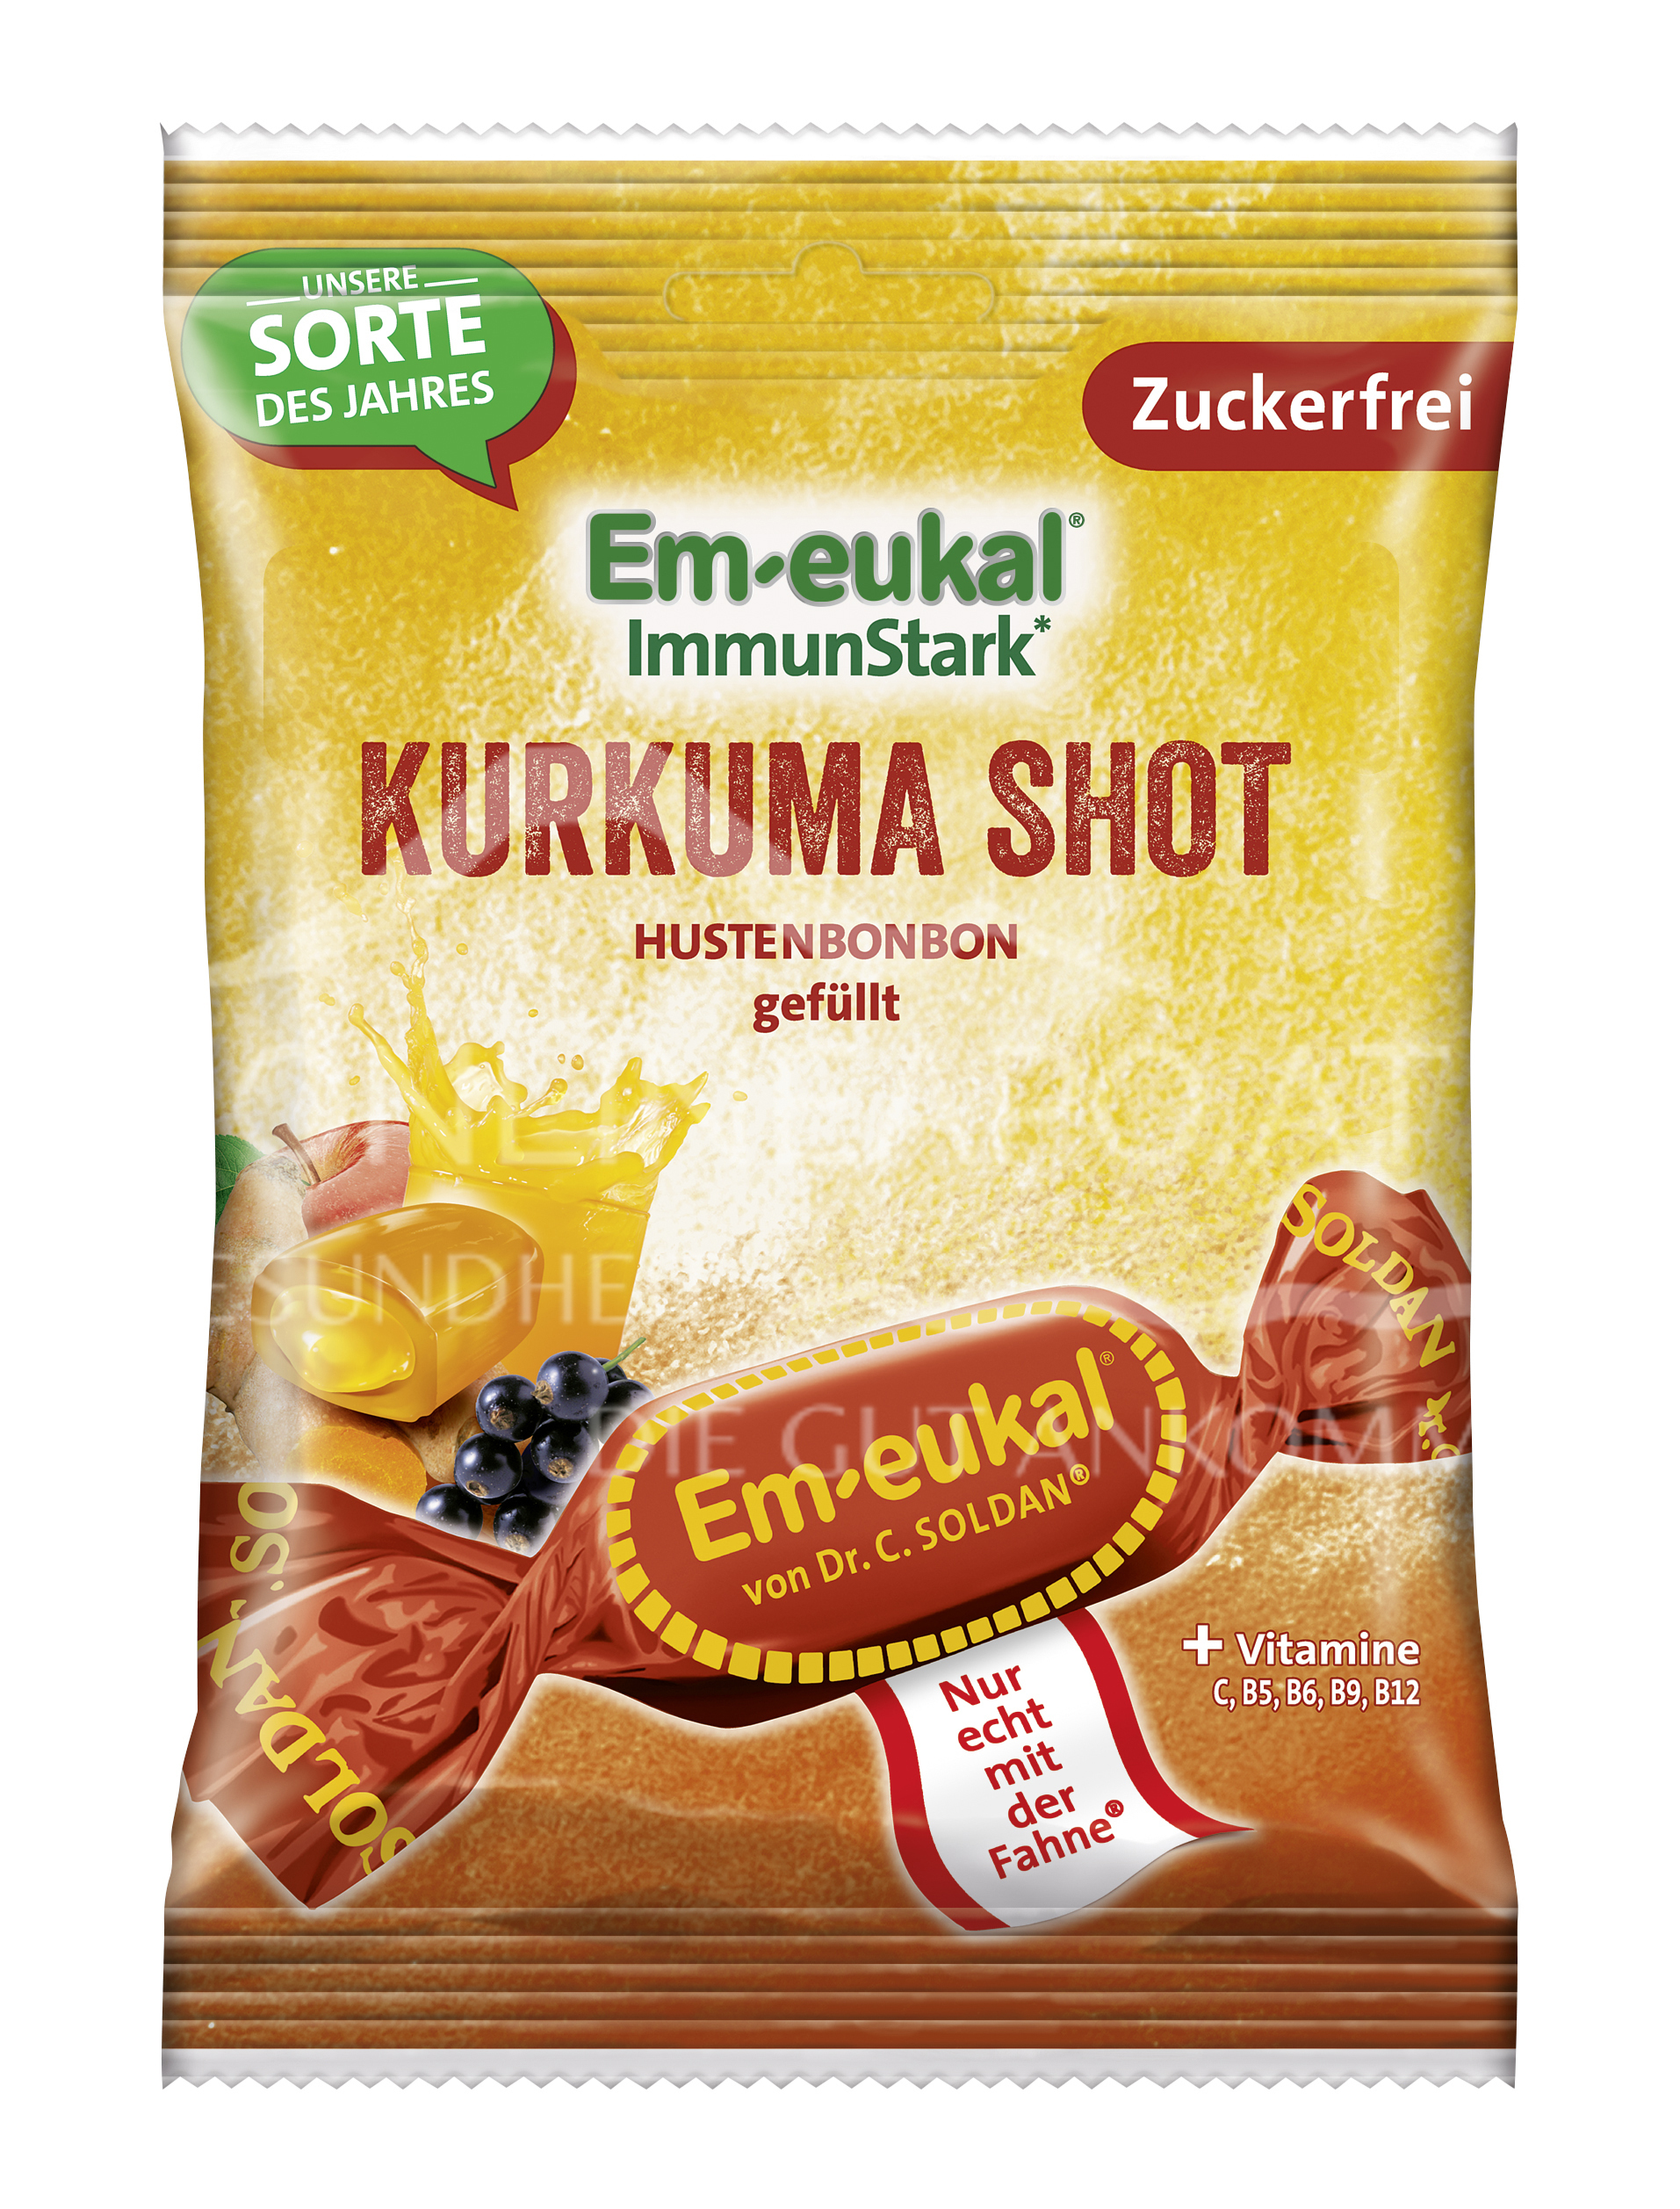 Em-eukal ImmunStark* Kurkuma Shot Hustenbonbons